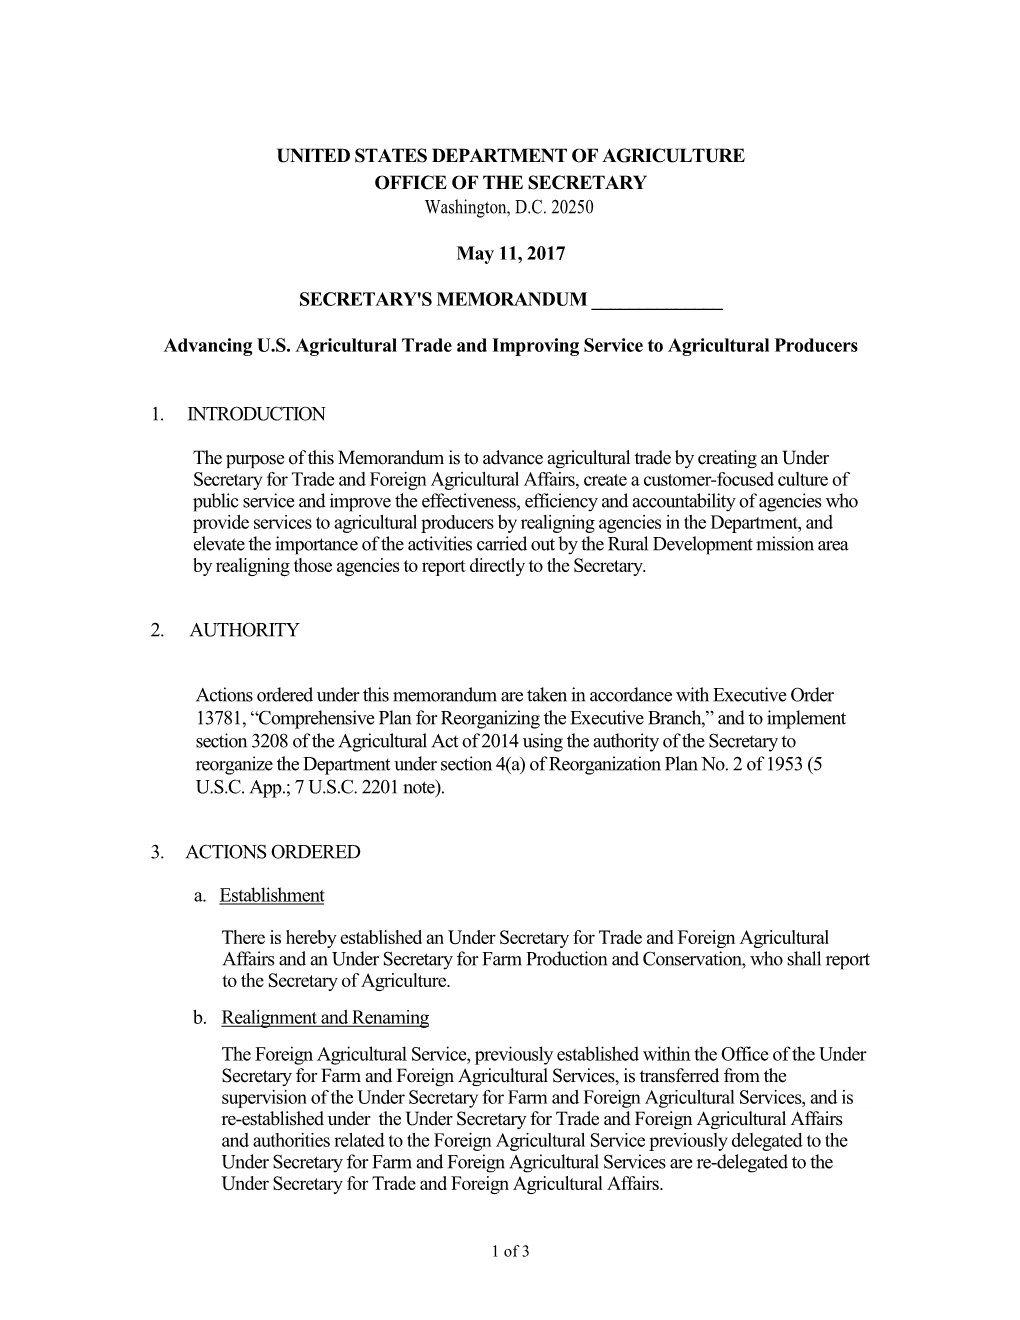 Secretary's Memorandum: Advancing U.S. Ag Trade & Improving Service